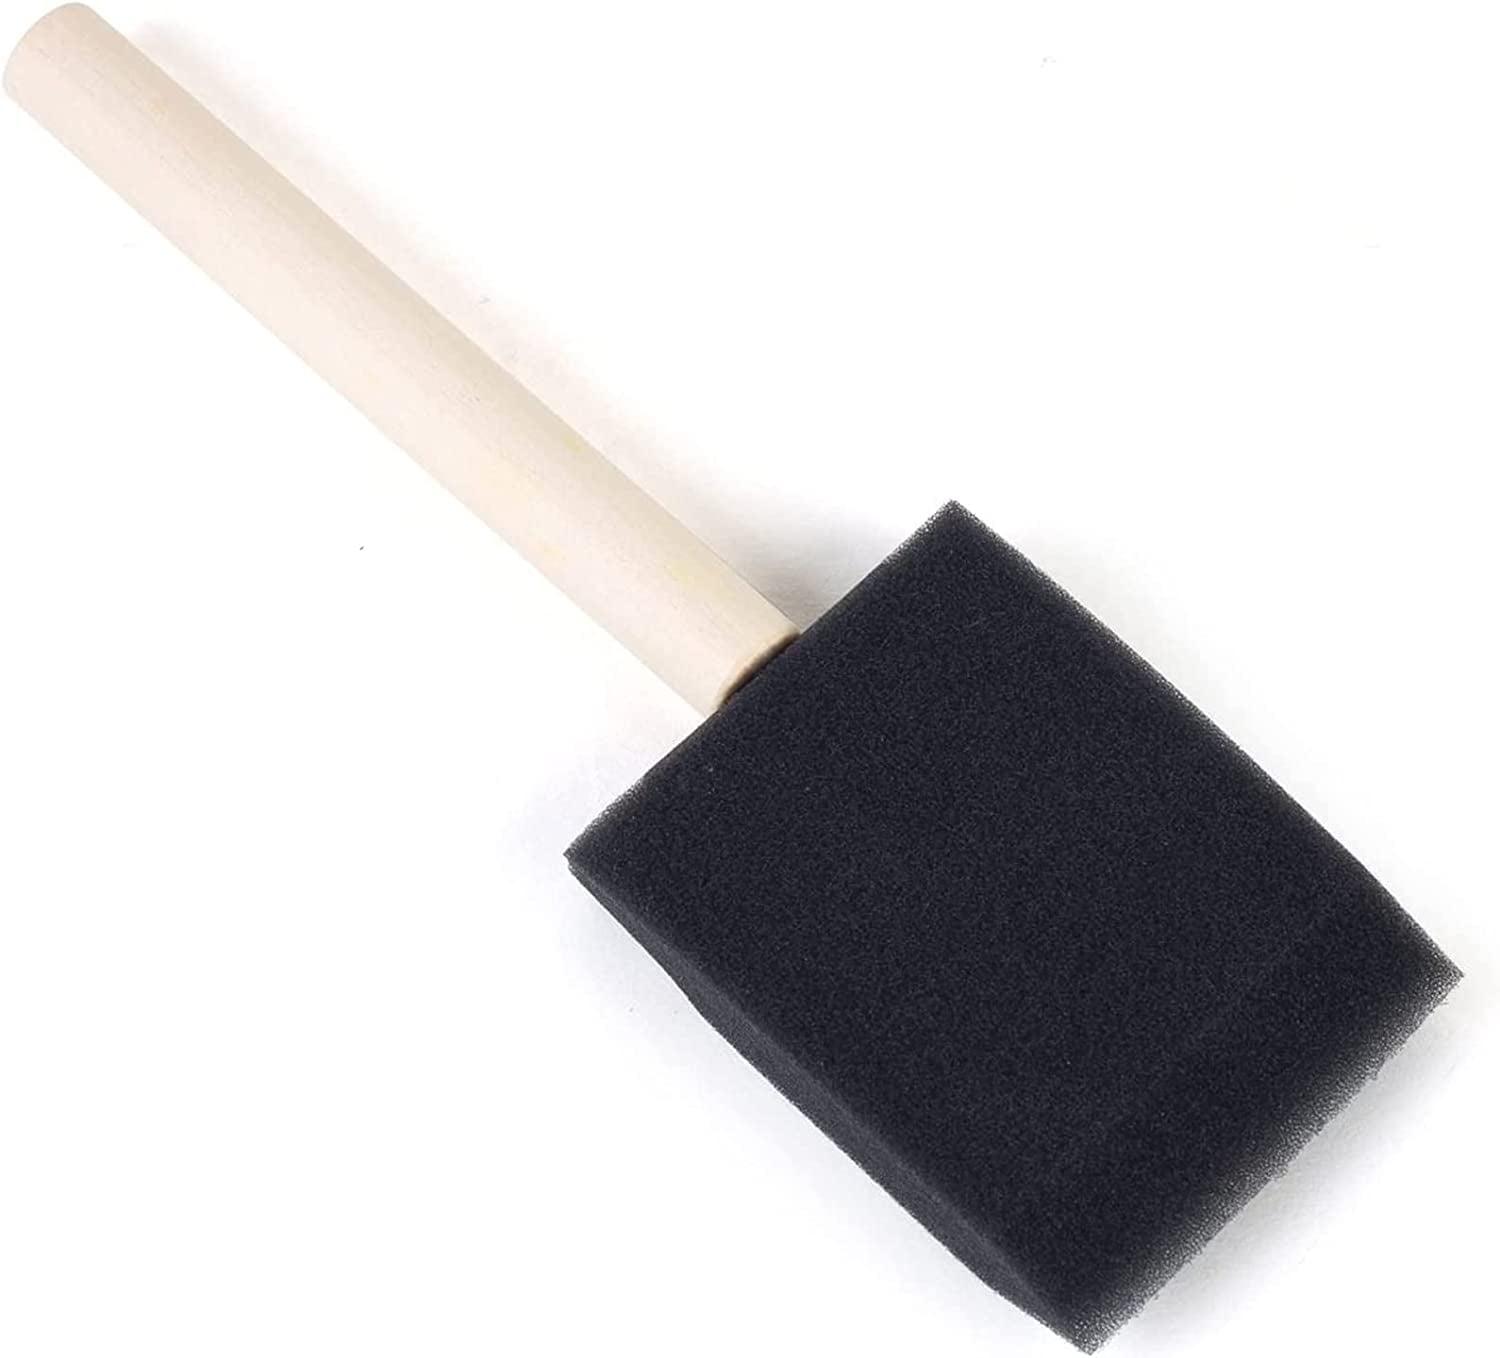 Rubberset Foam Paint Brush - Natural/Black, 2 in - Kroger